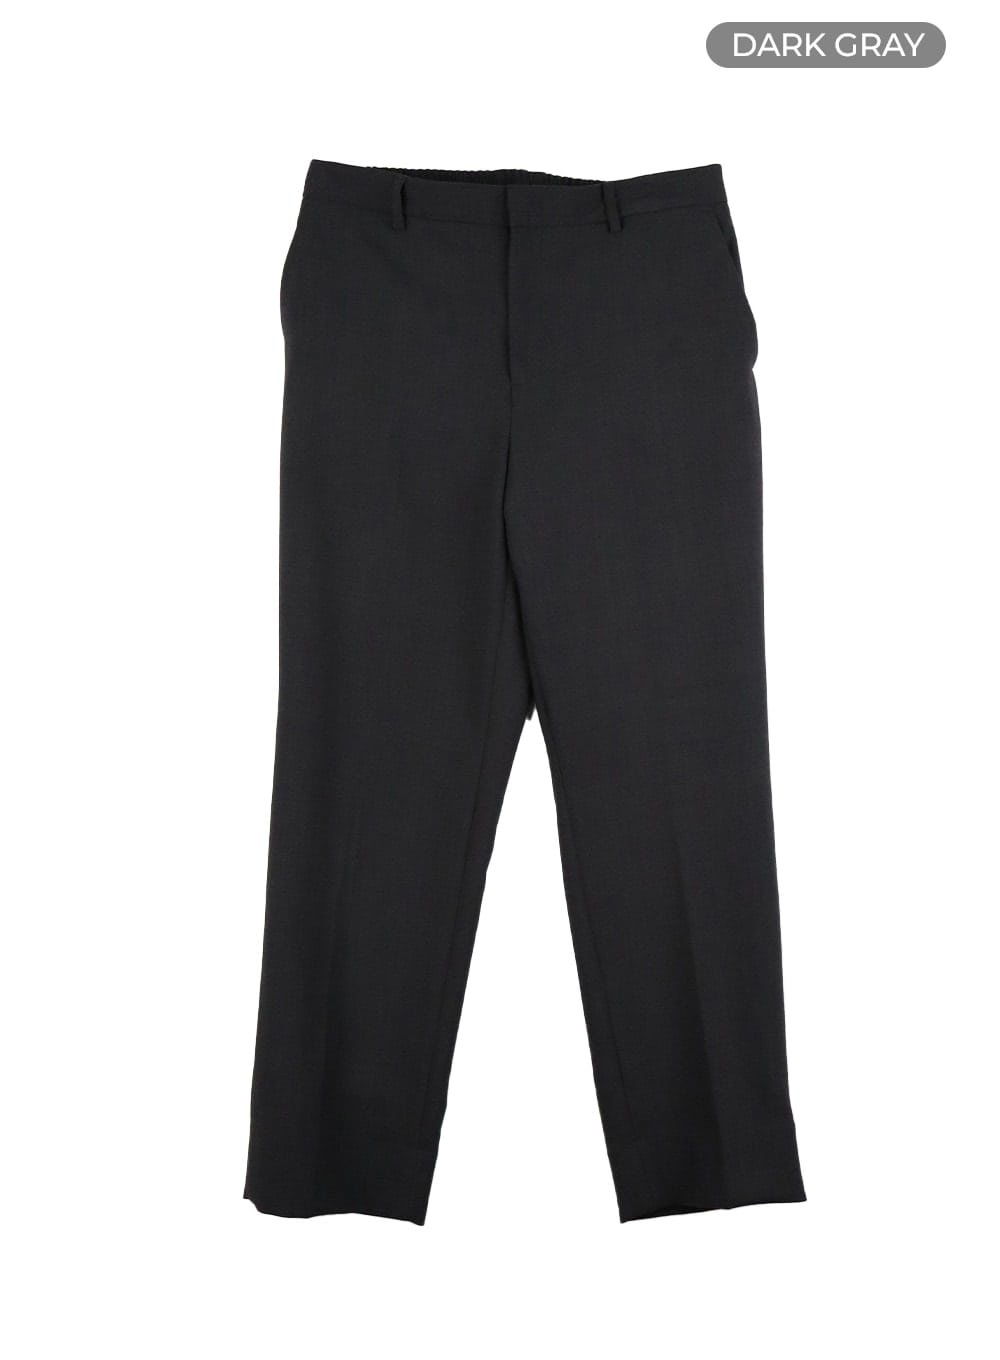 mens-classic-straight-suit-pants-ia402 / Dark gray